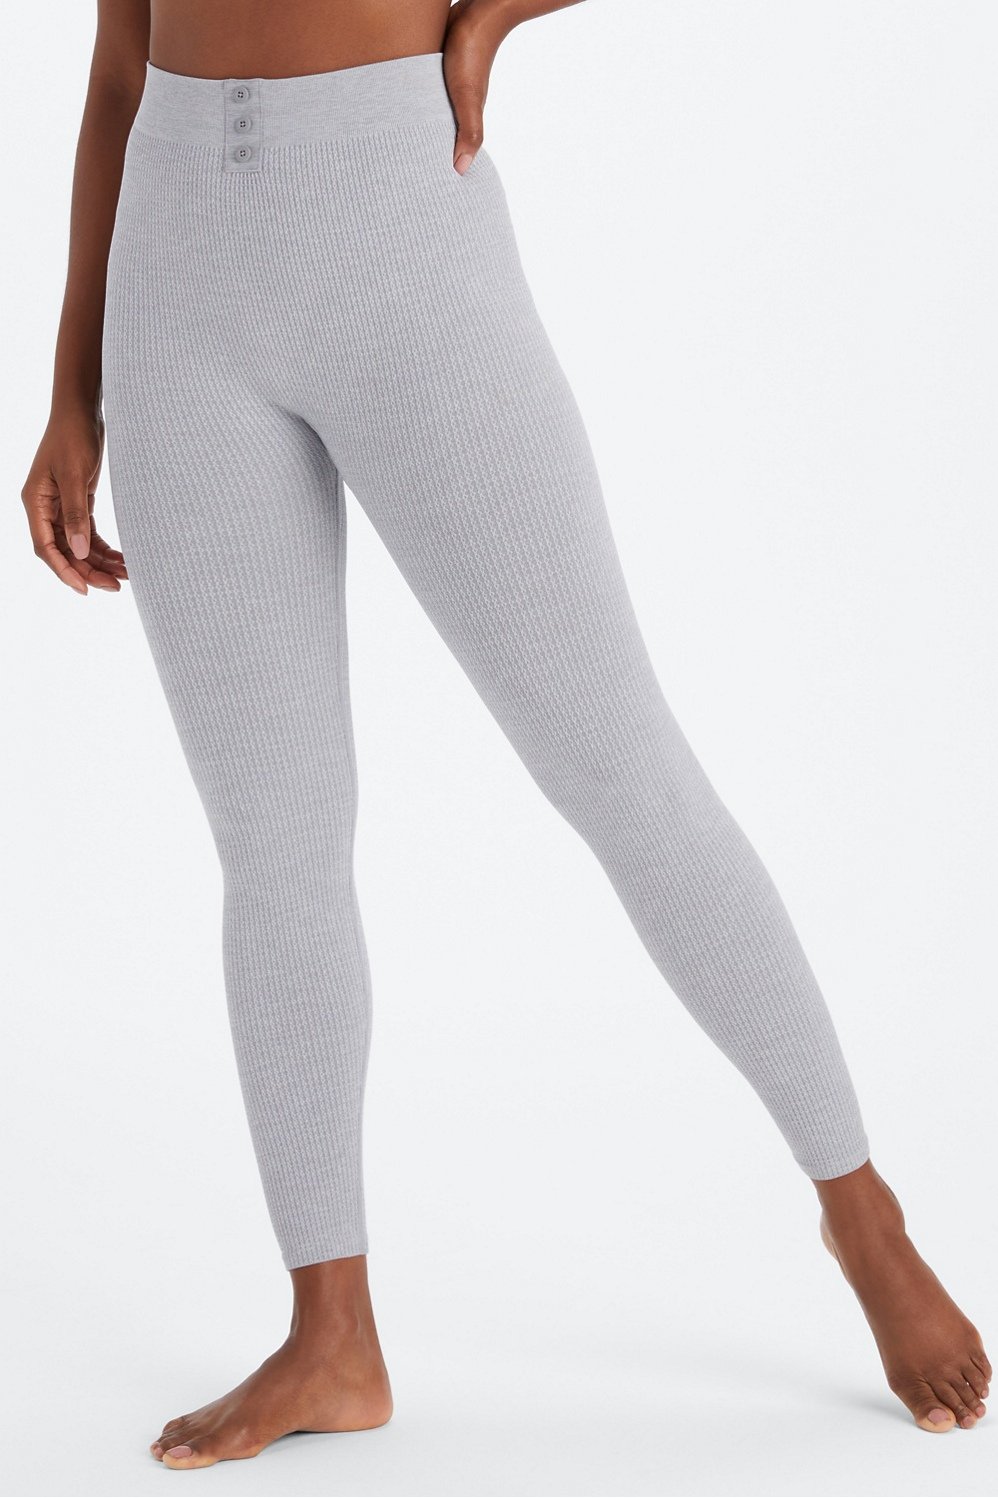 NWT Fabletics Warp Knit Mid-rise Jaquard legging gray womens size L